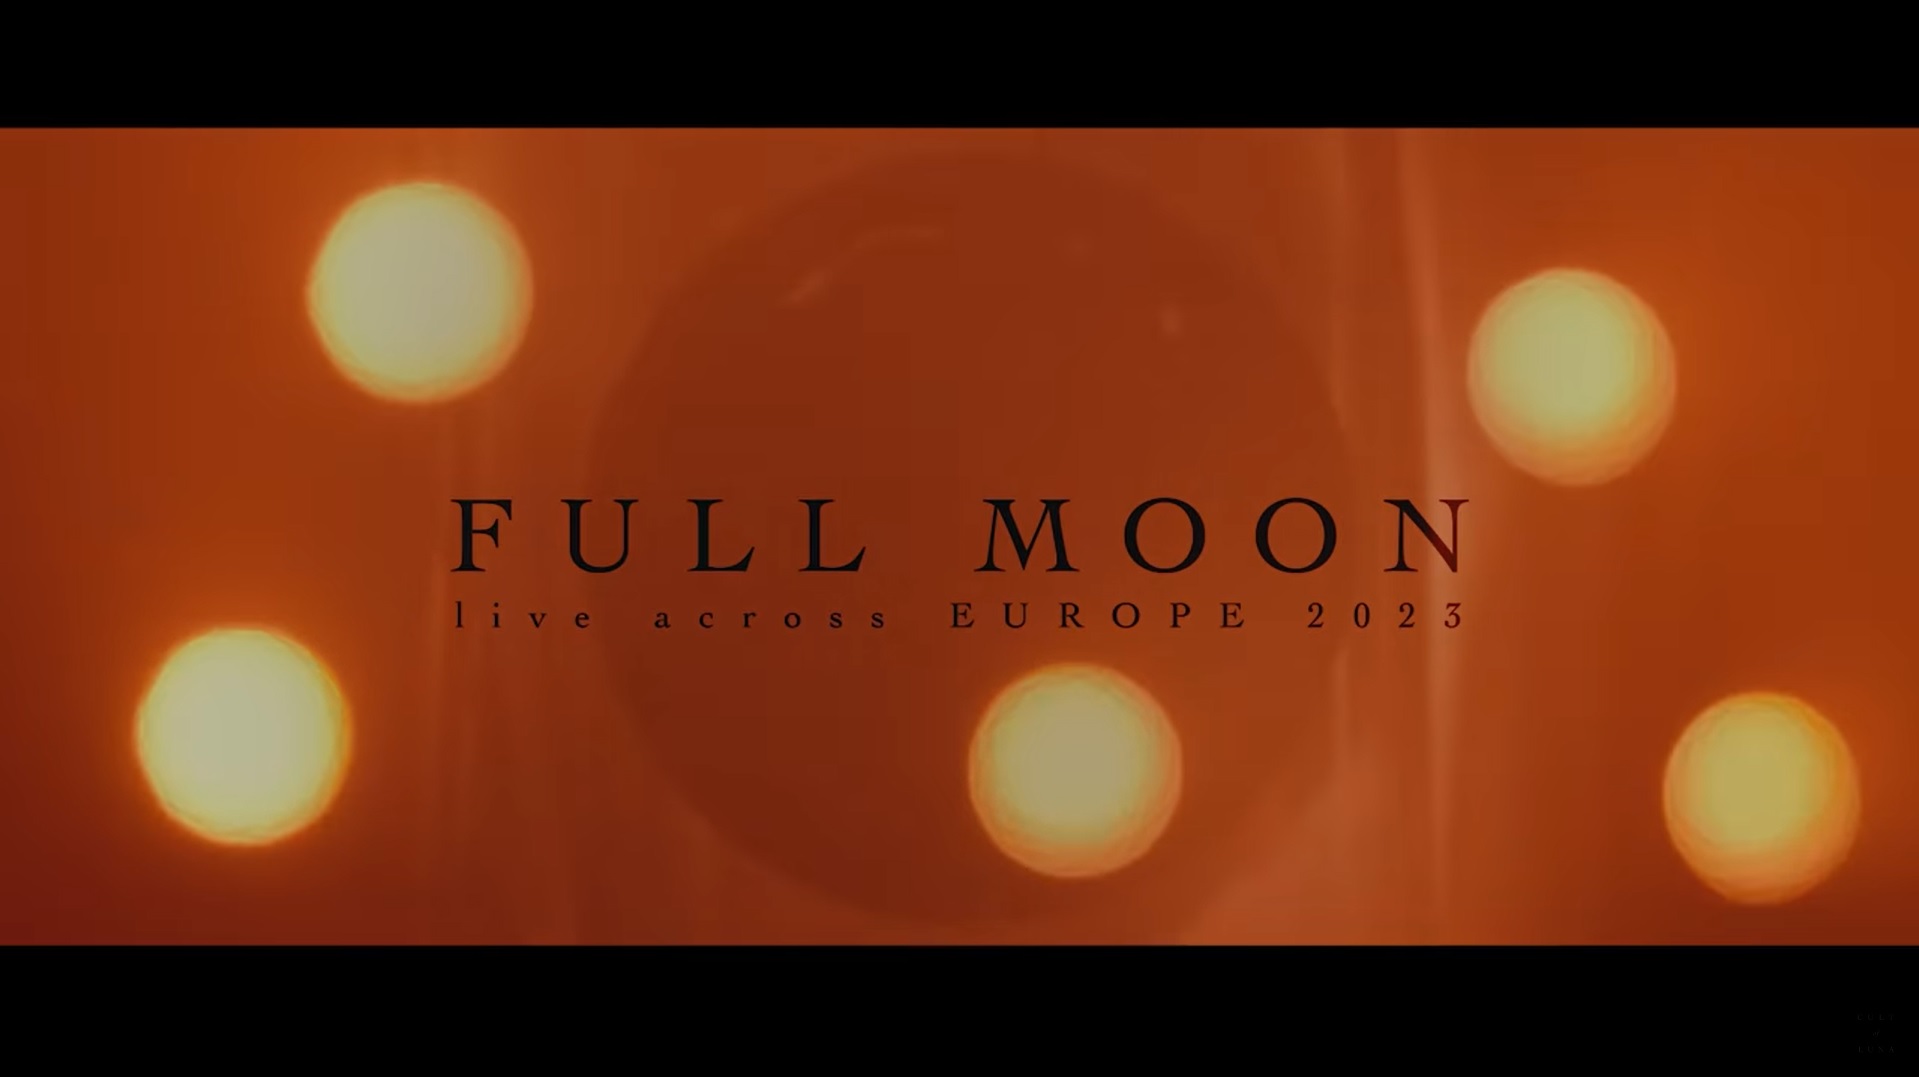 Cult of Luna “Full Moon” documentary